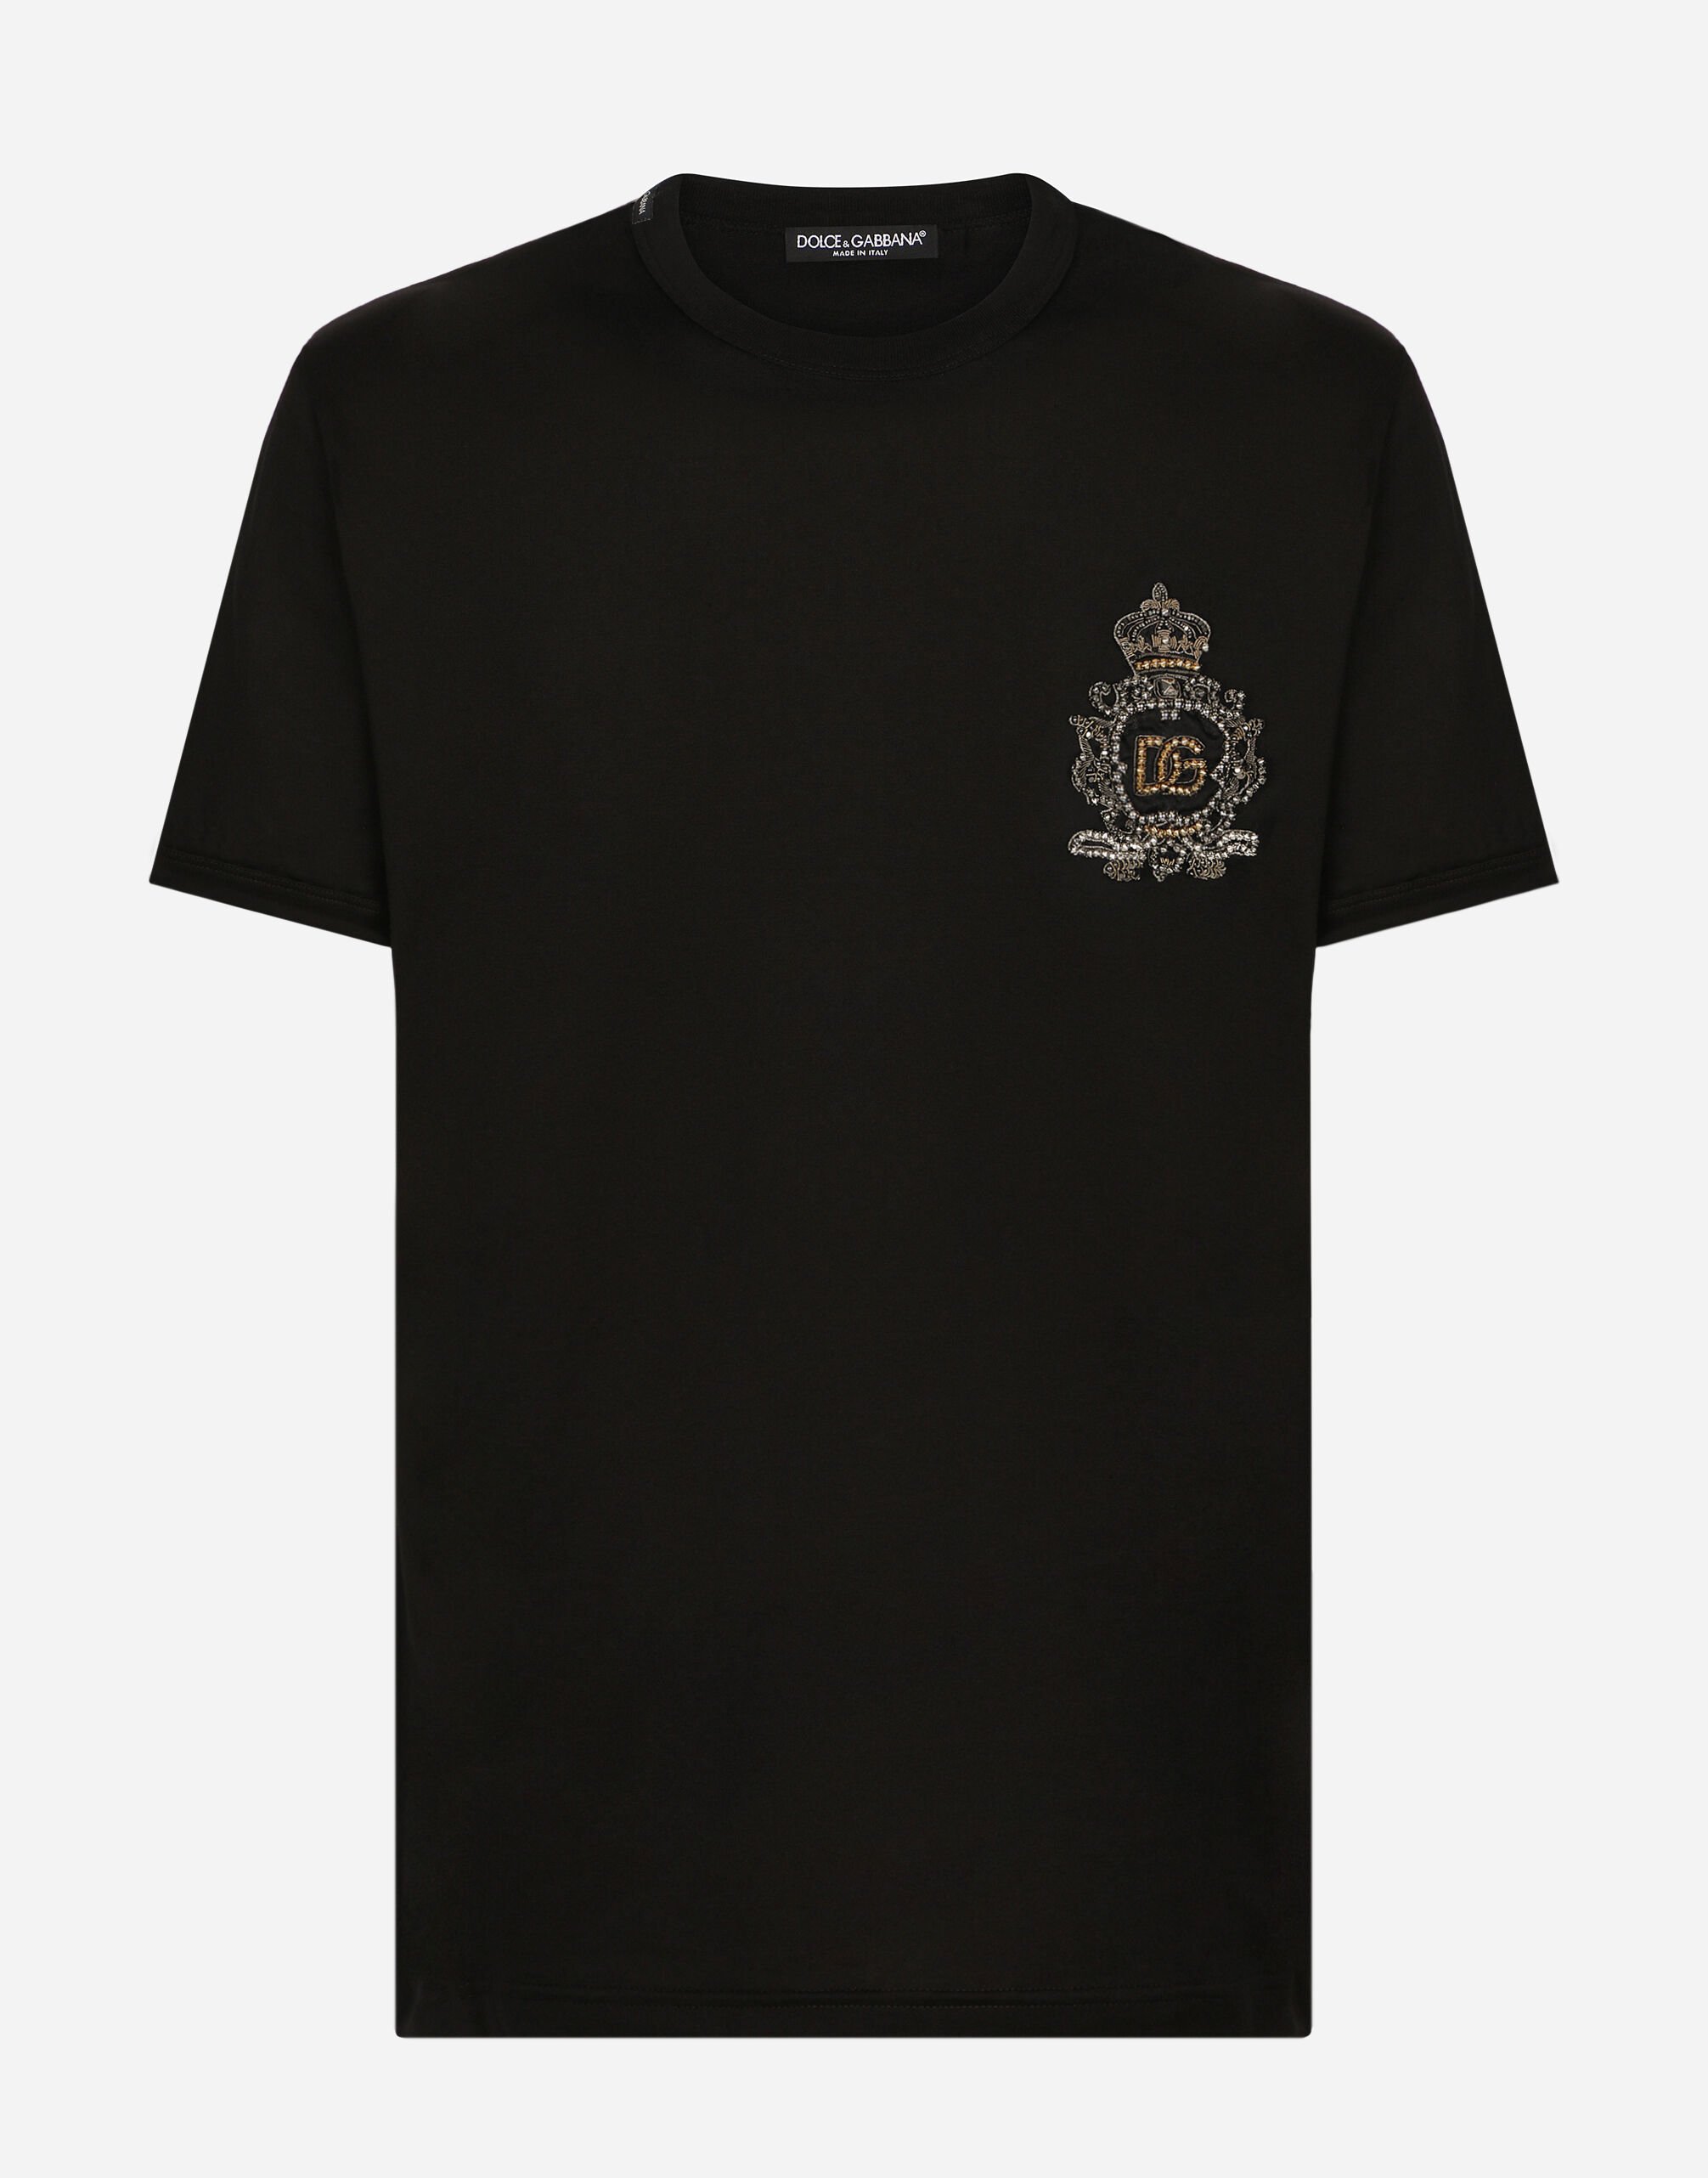 Dolce & Gabbana Cotton T-shirt with heraldic DG patch Black G8KK1TFU7EN